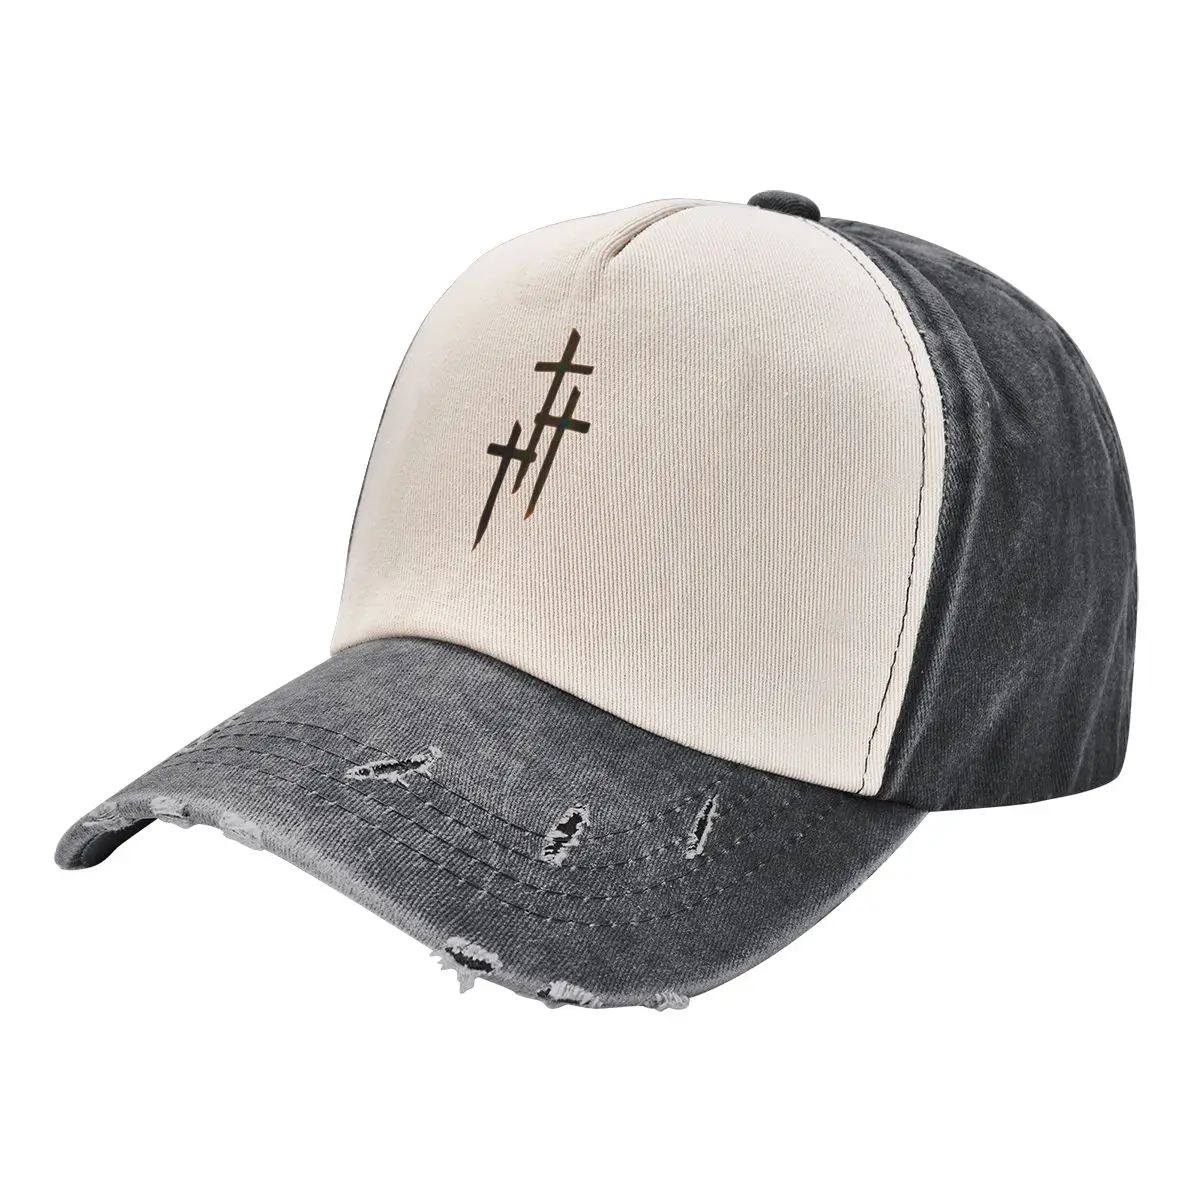 

Three Crosses Baseball Cap Sunhat Golf Hat Man Caps For Men Women's